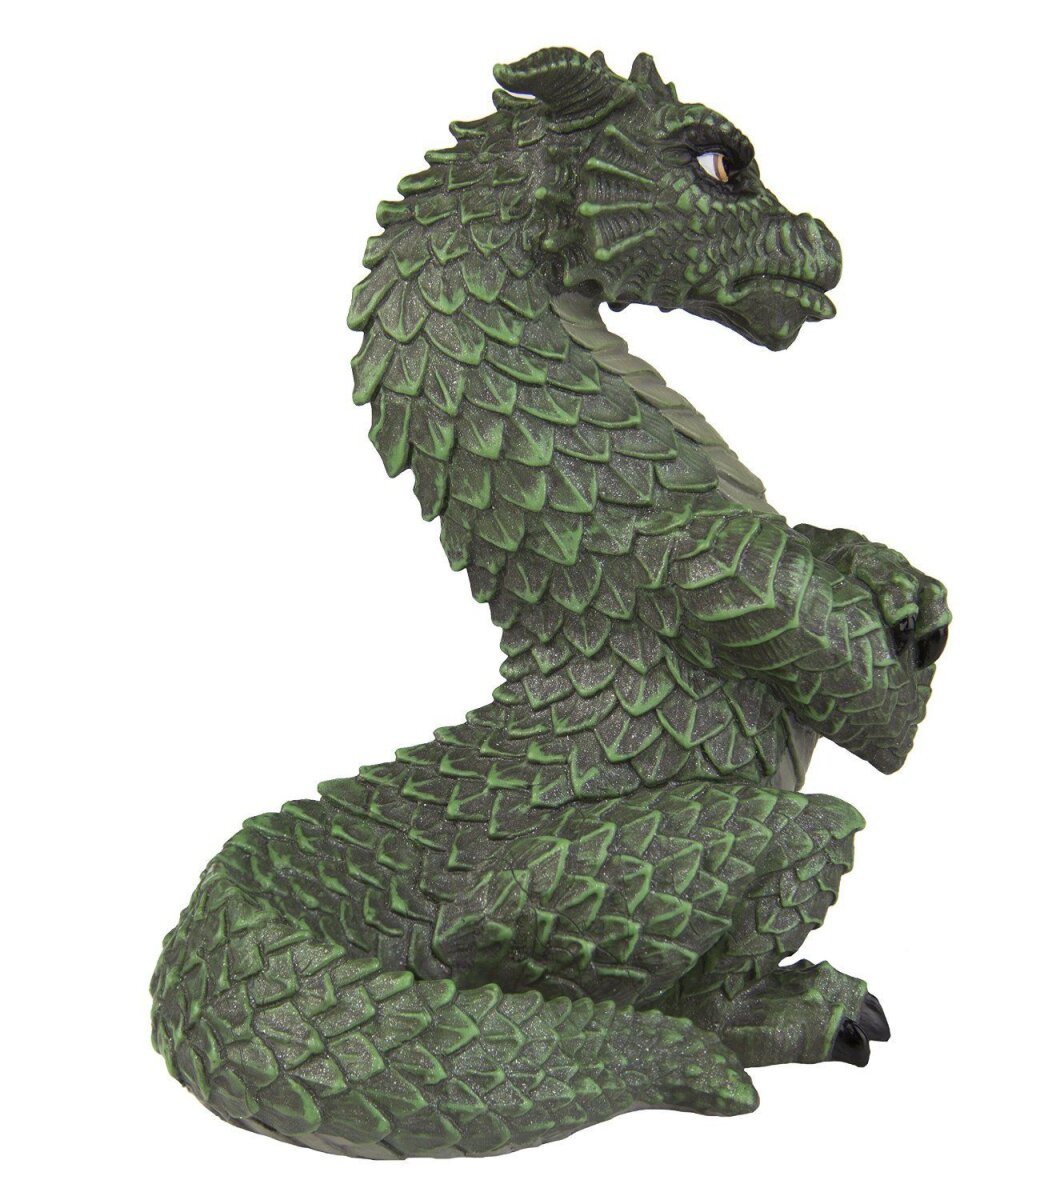 Safari Ltd. Dragon 10137 - Grumpy Dragon